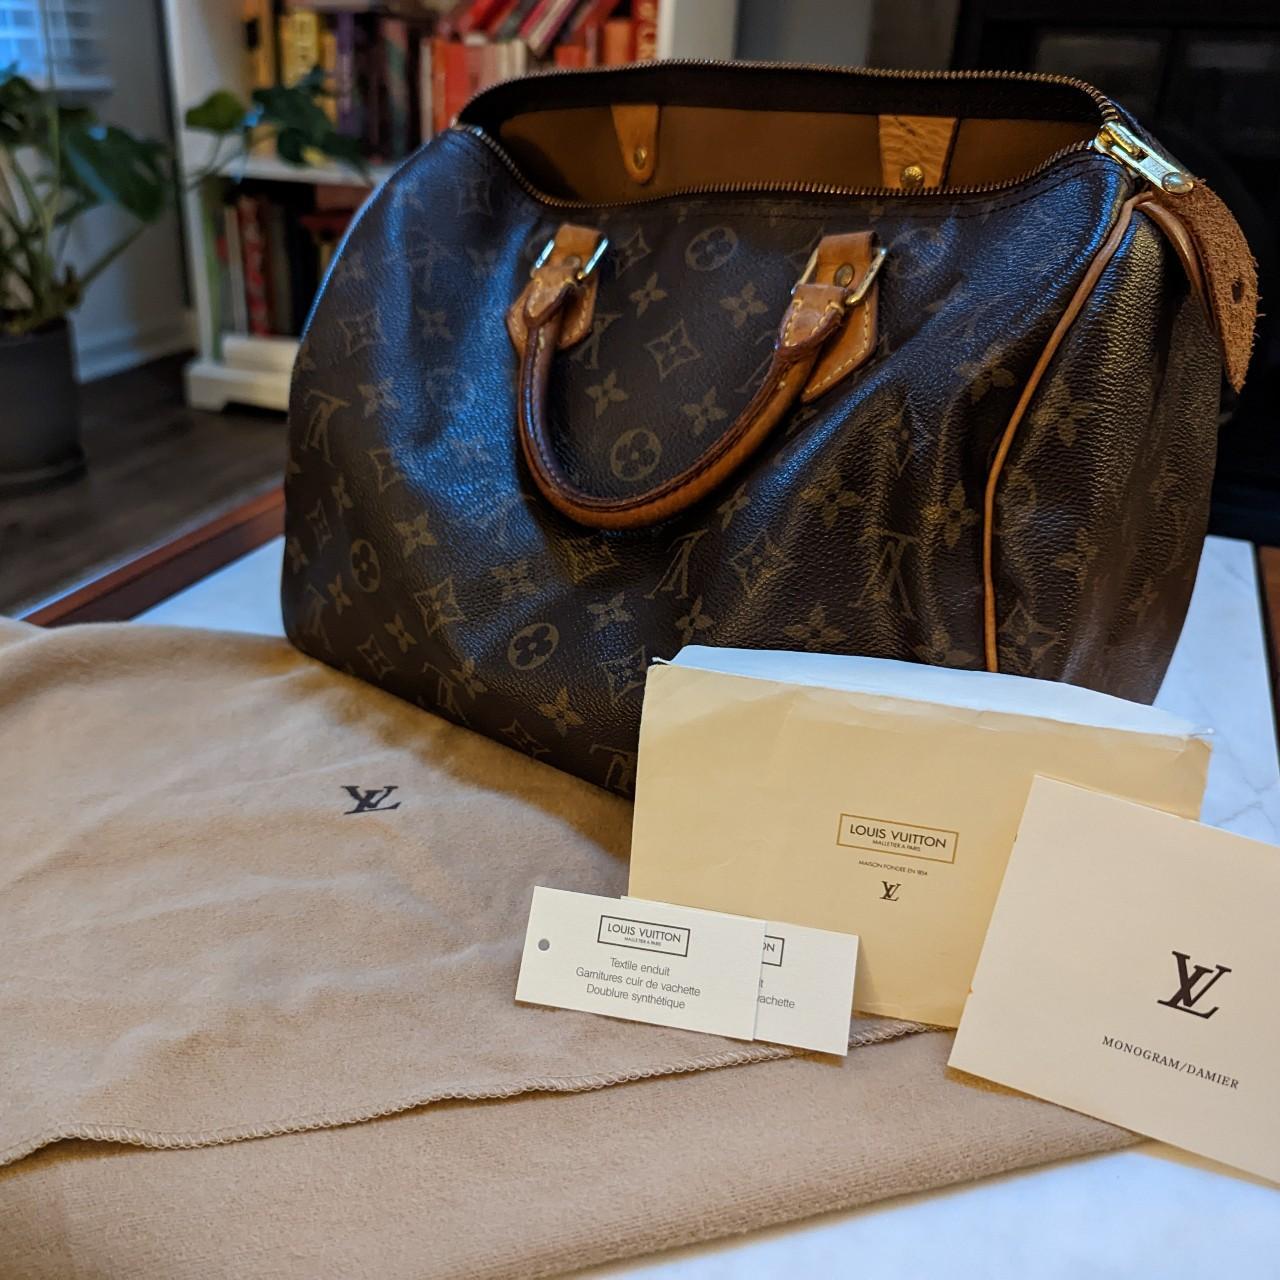 Authentic vintage Louis Vuitton monogram Speedy 30. - Depop